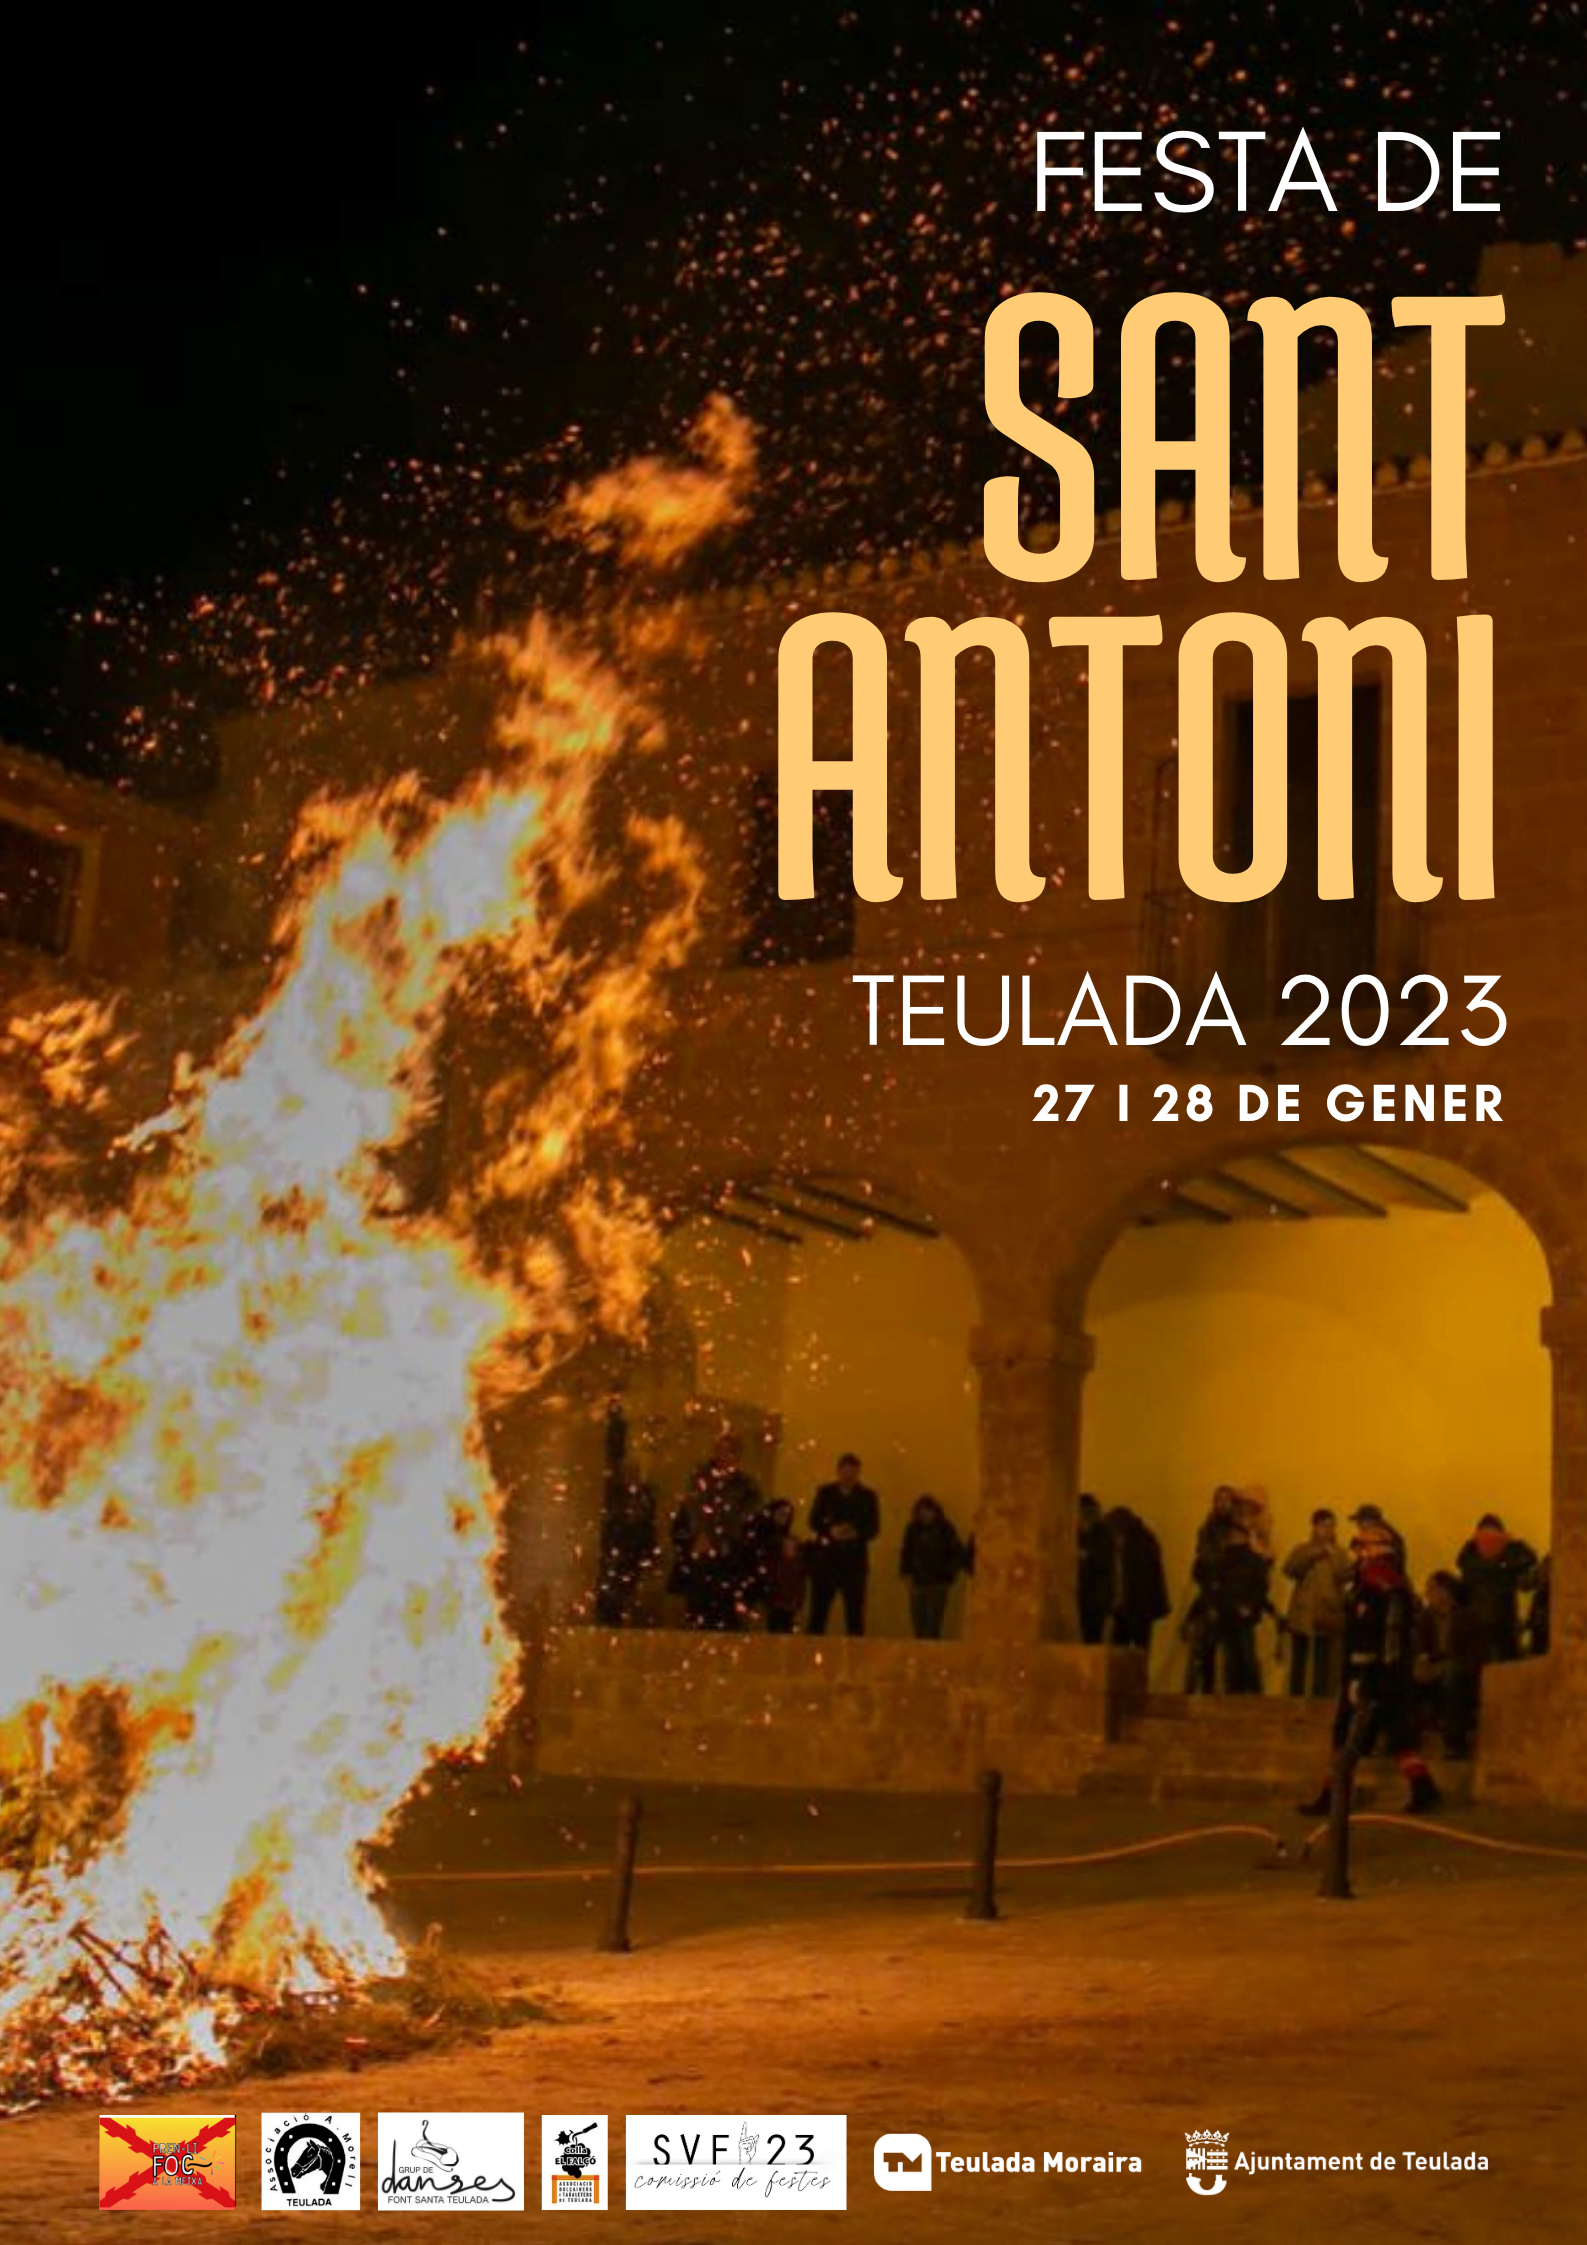 Cartel de las Fiestas de Sant Antoni Teulada Moraira 2023